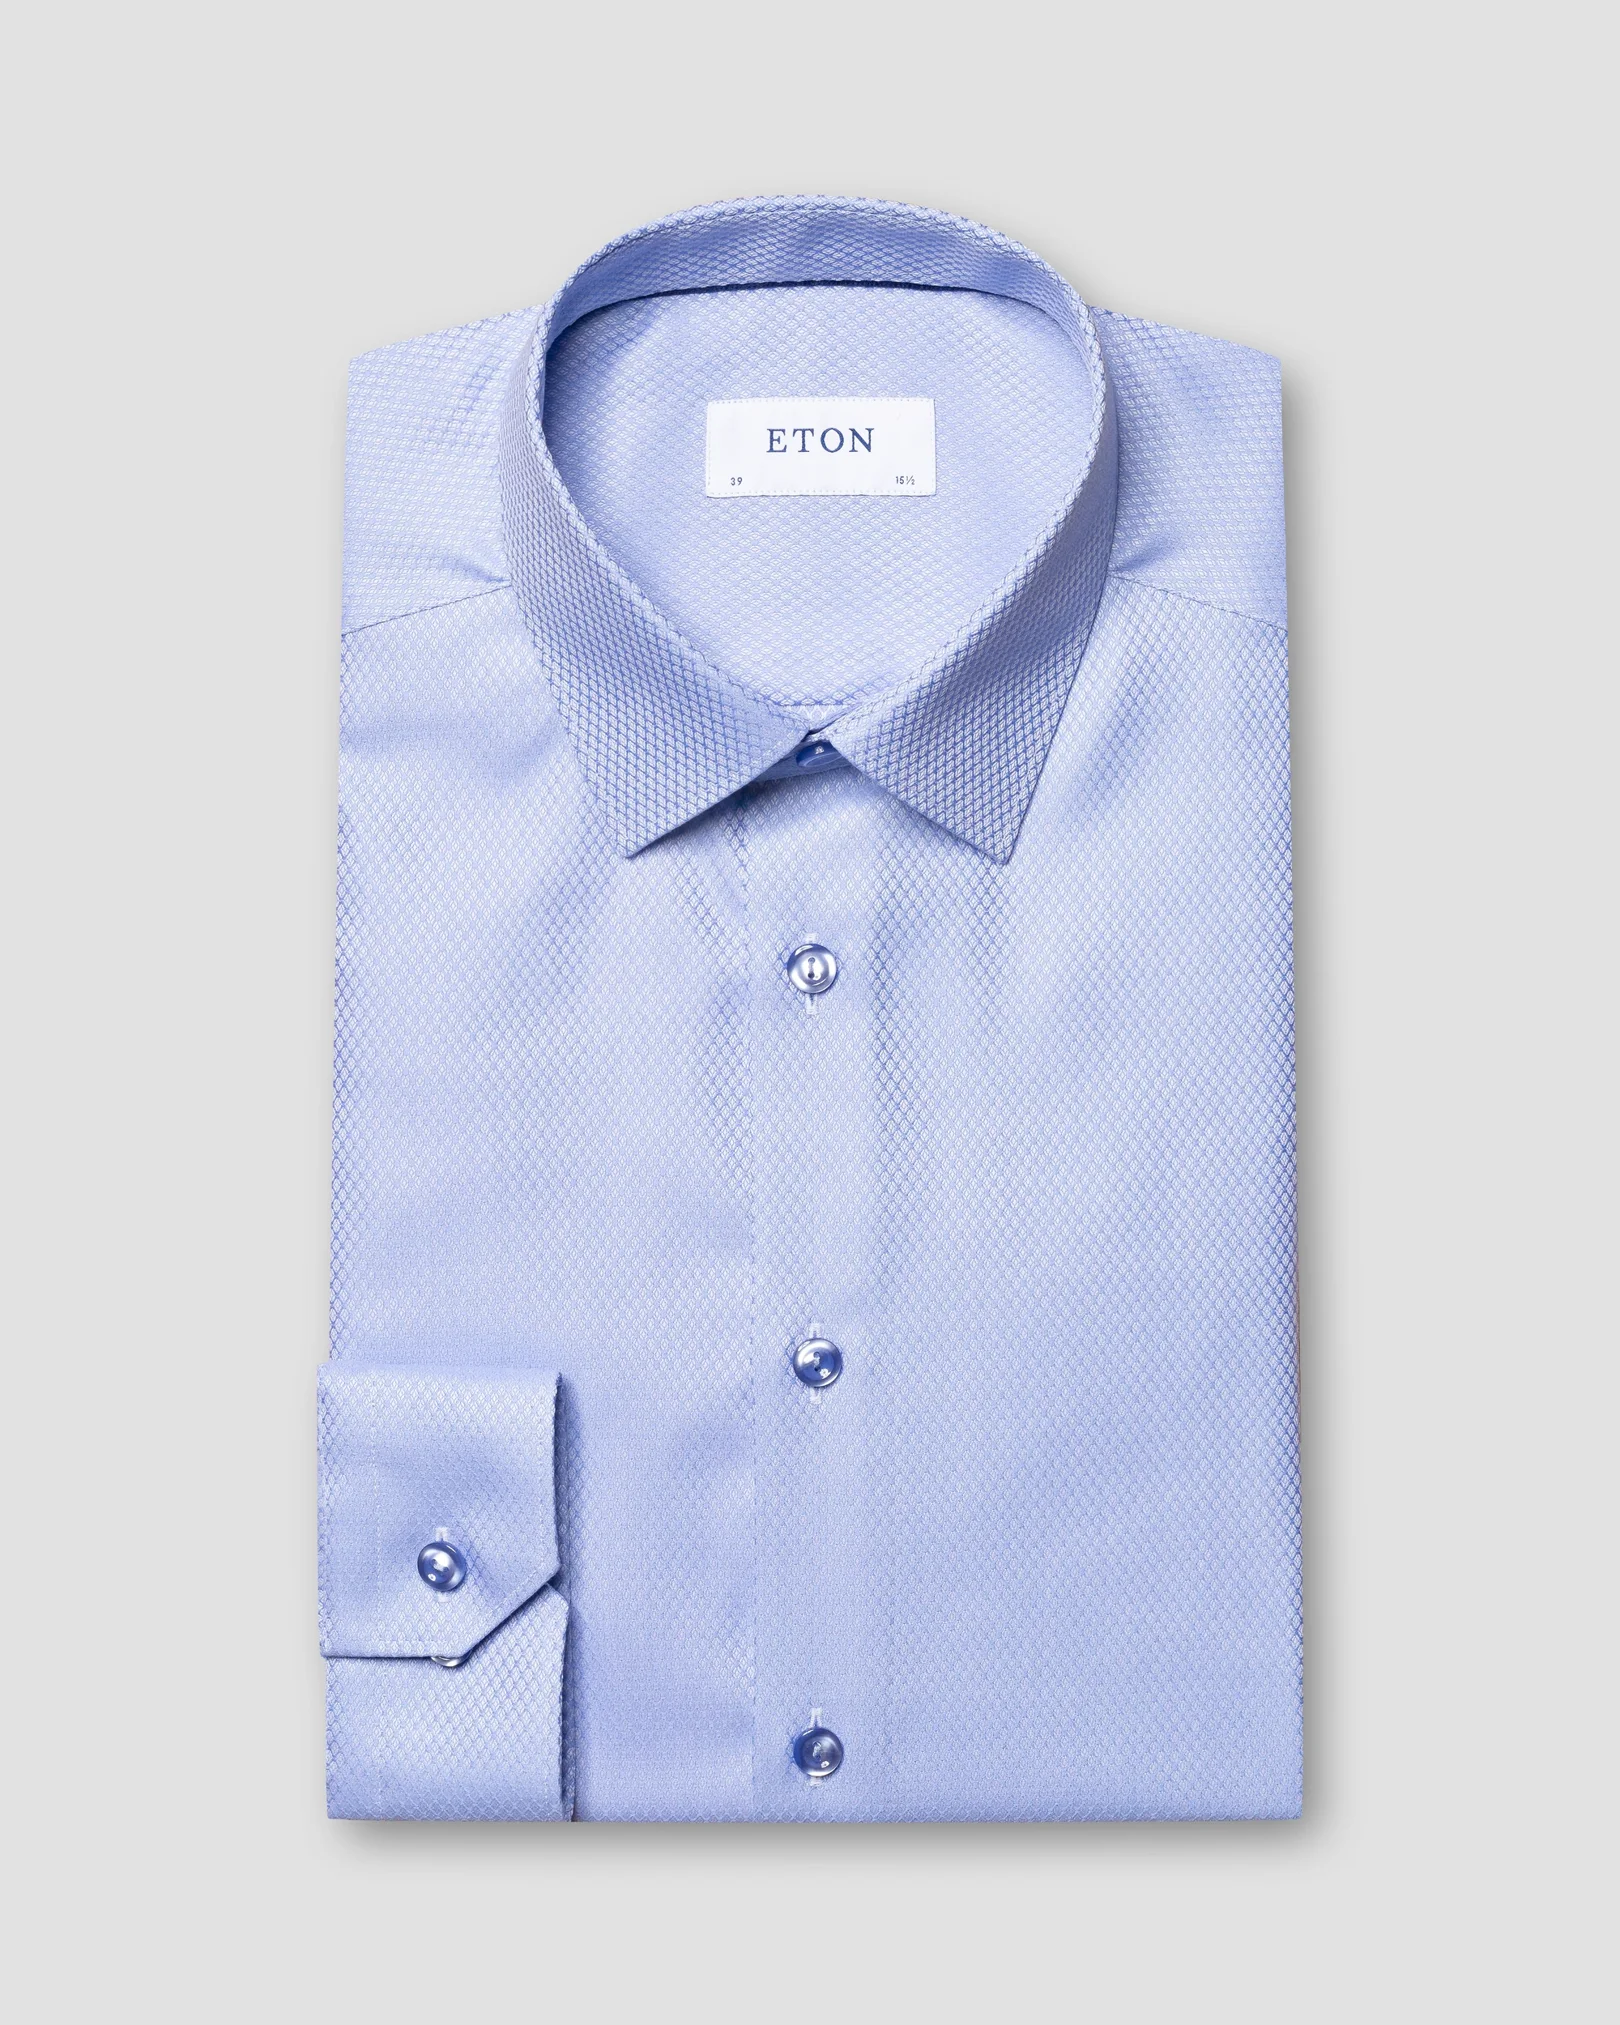 Eton - blue dobby shirt pointed